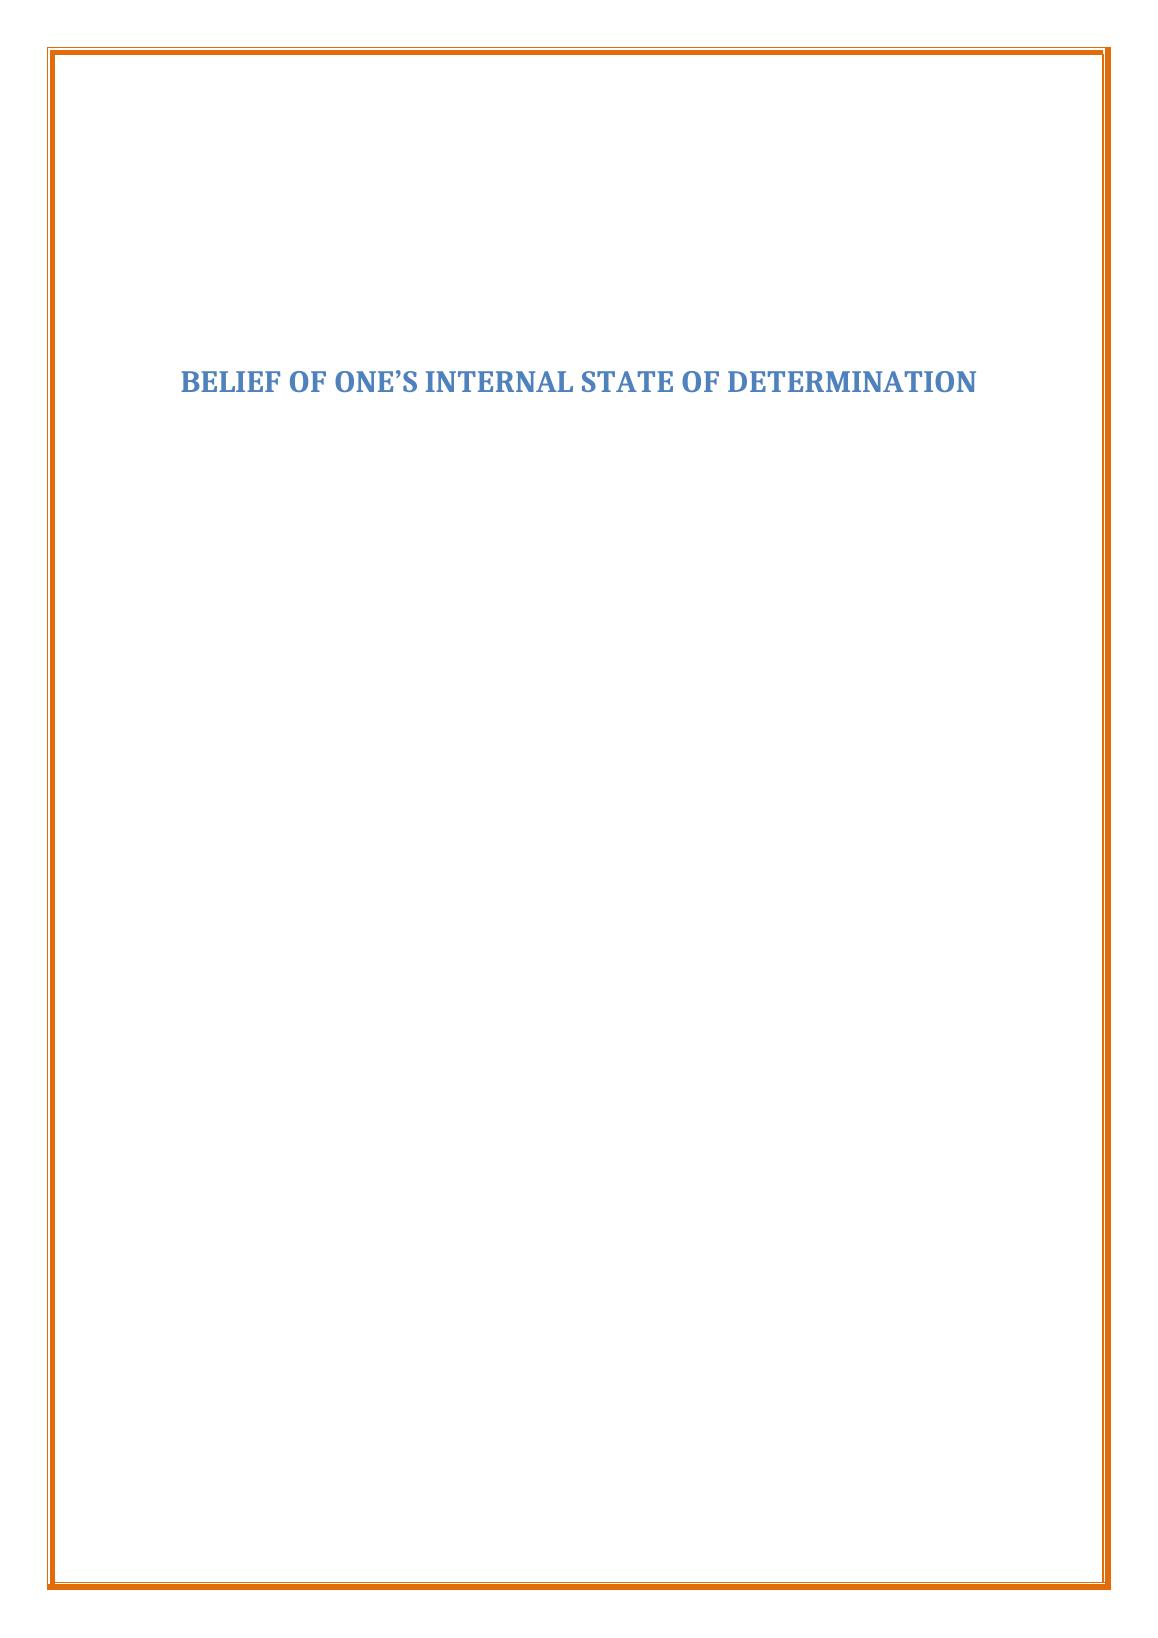 Belief of Internal State of Determination_1